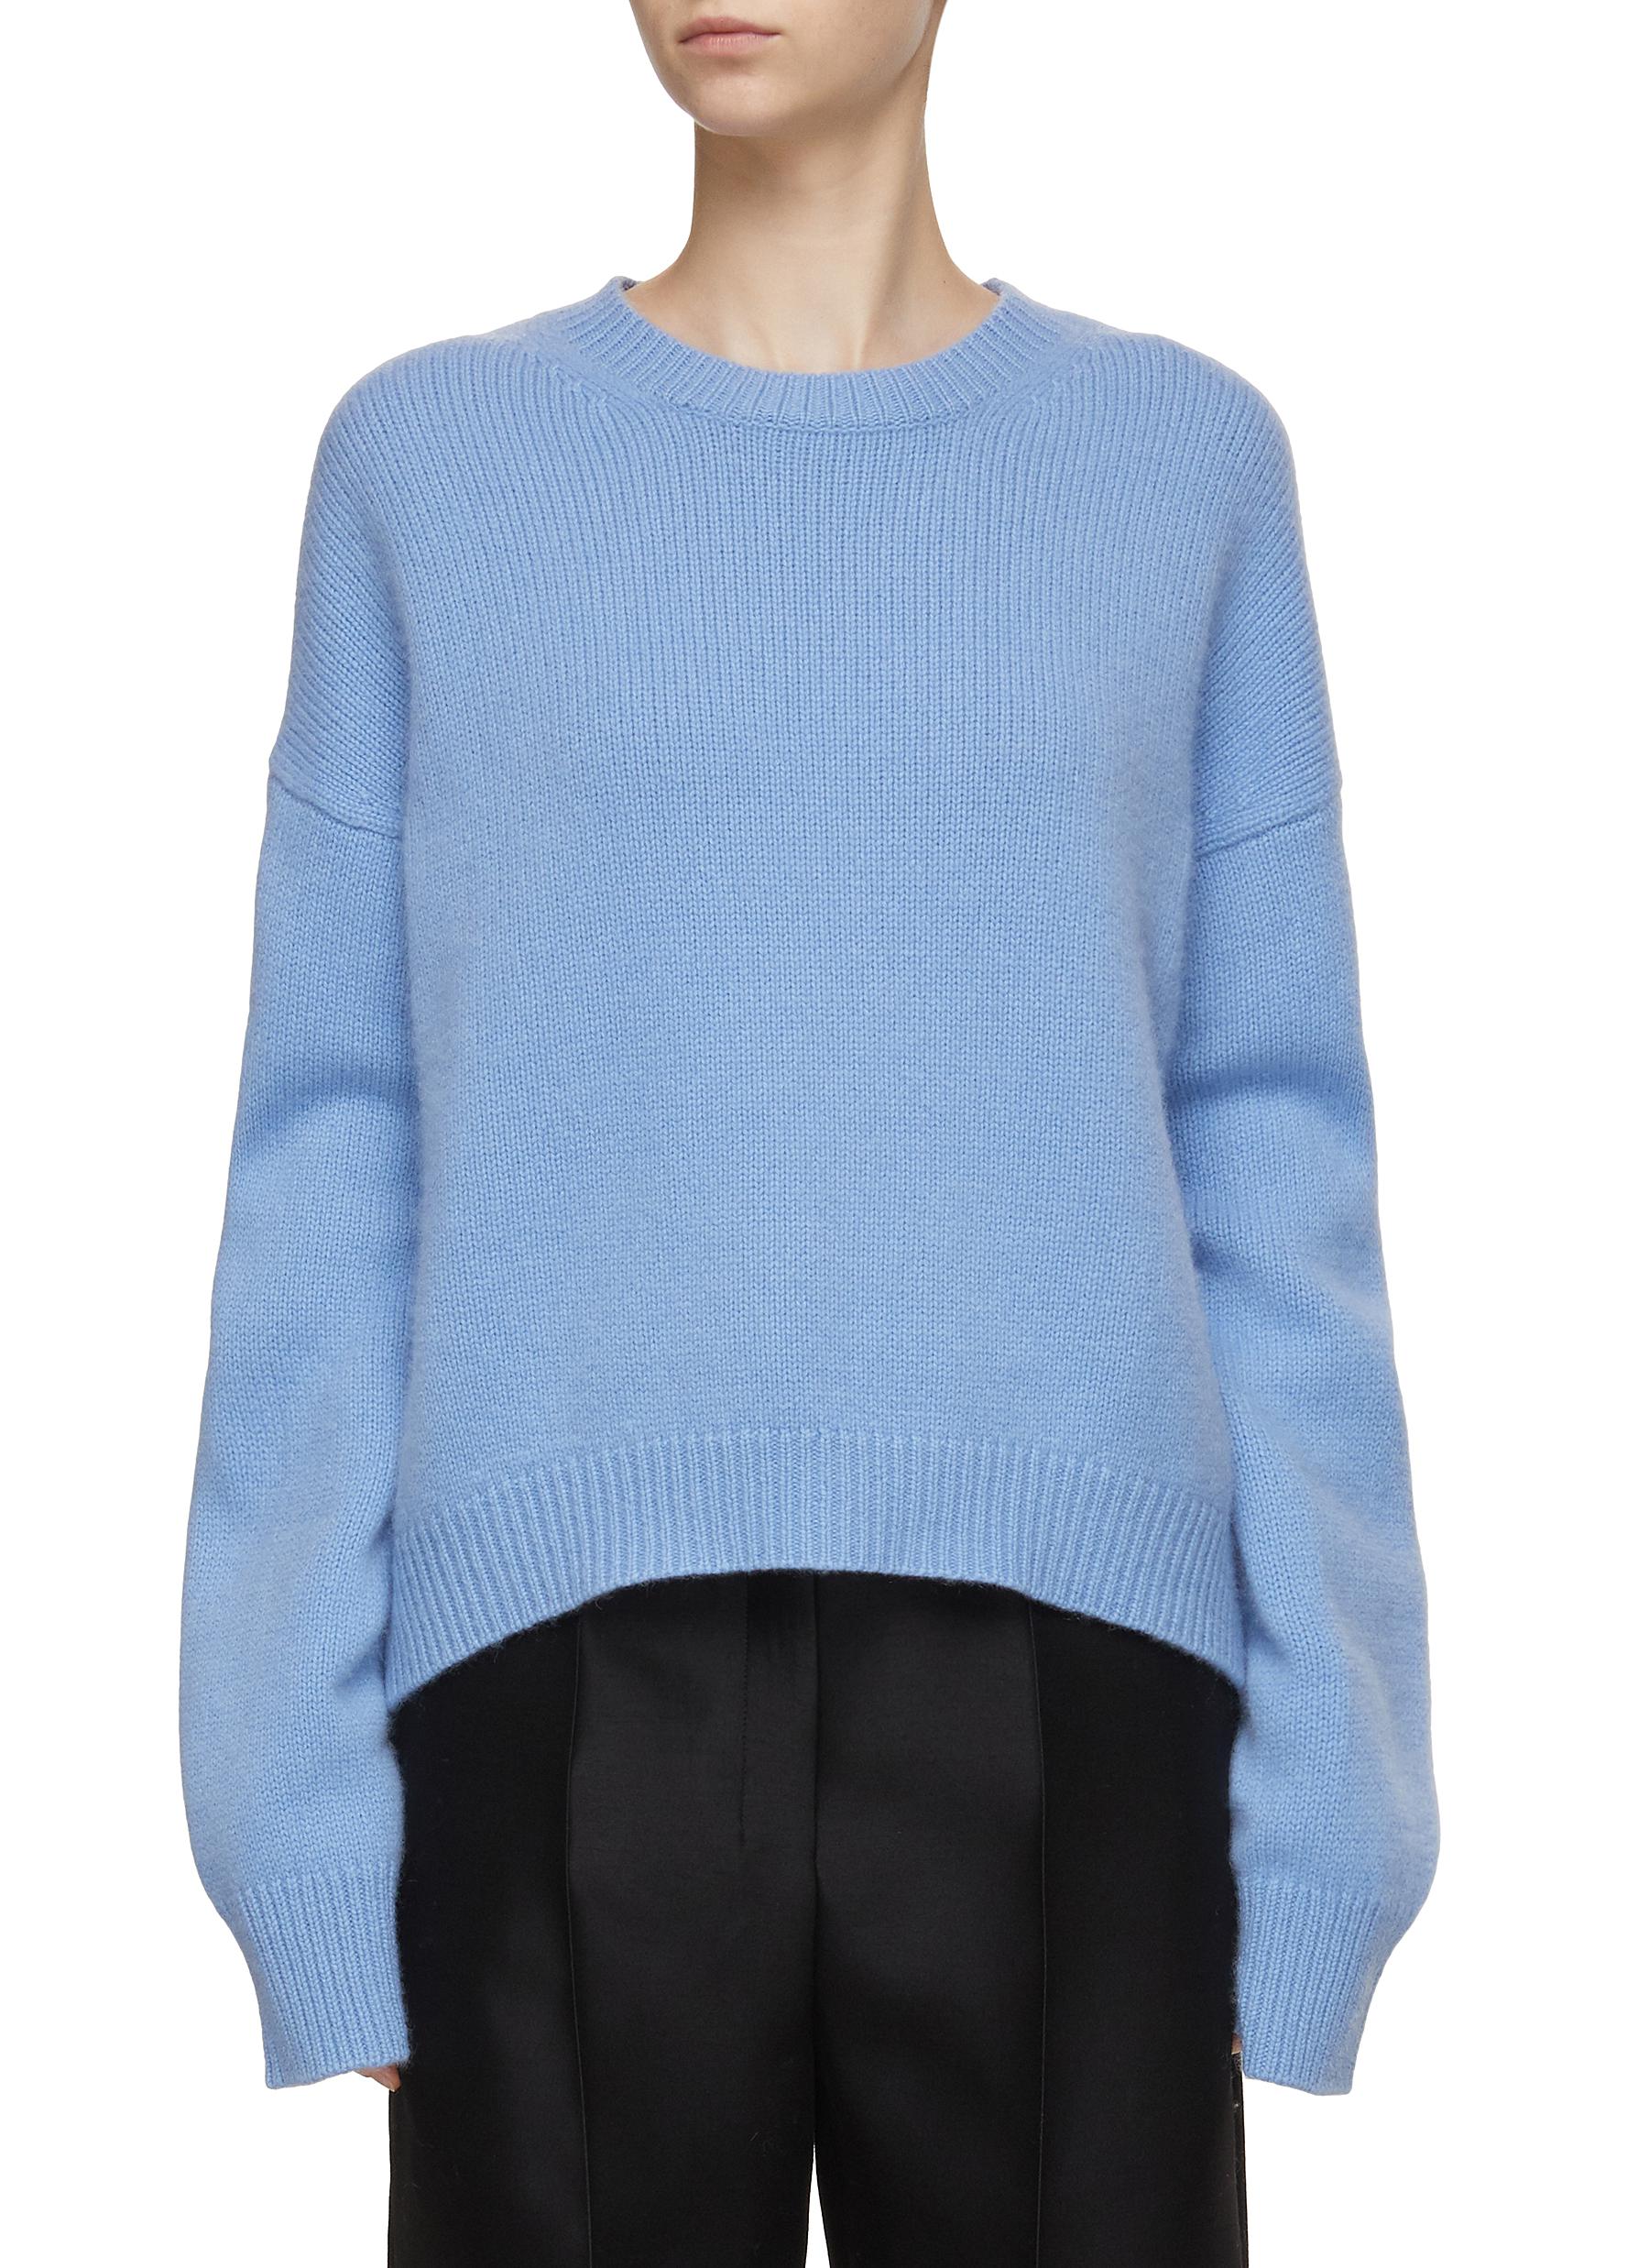 ARCH4, Relaxed Sweater, LIGHT BLUE, Women